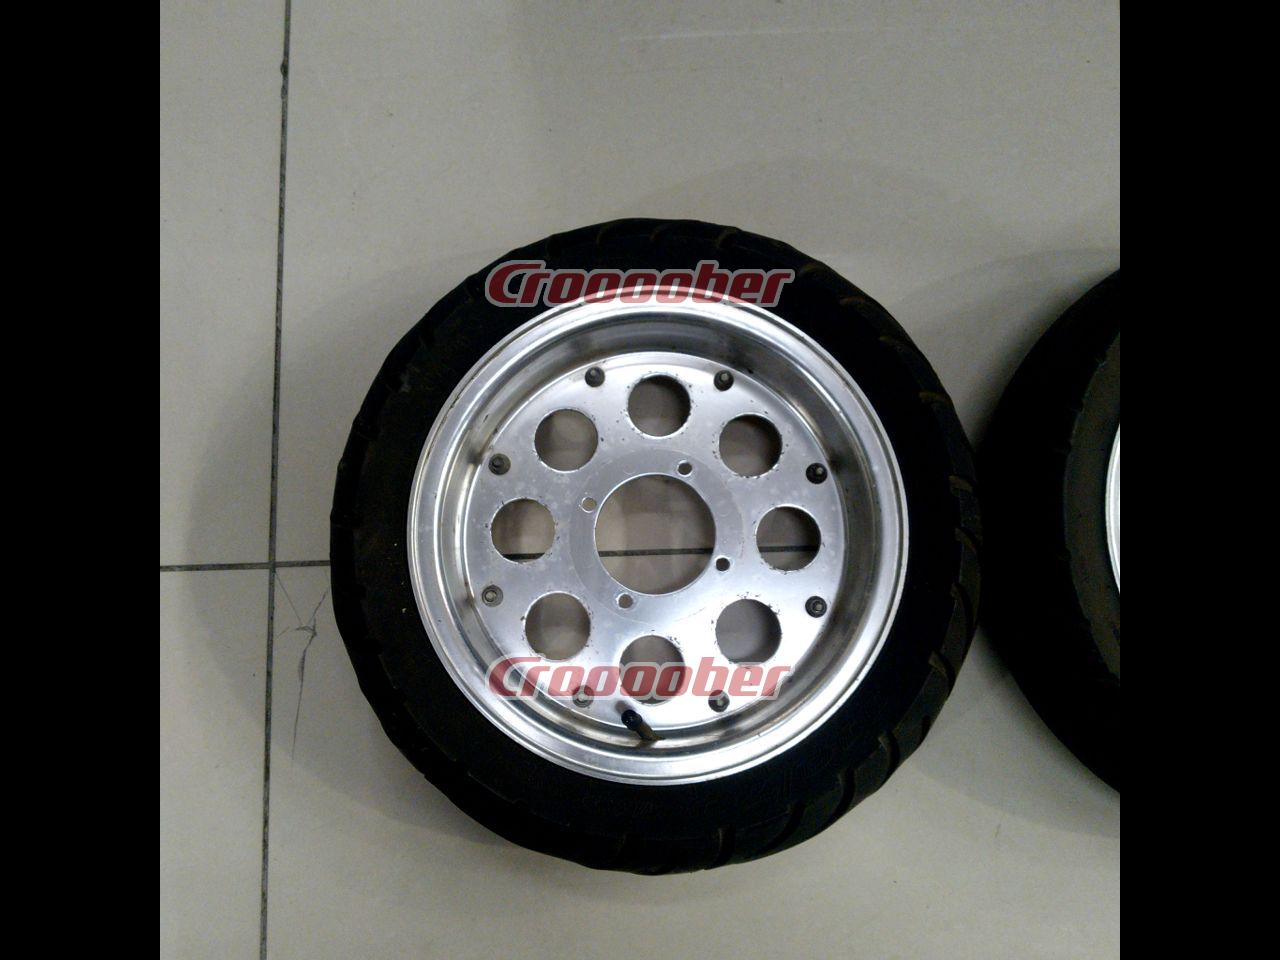 Unknown Manufacturer Wheel 10 Inch - Rims for Sale | Croooober